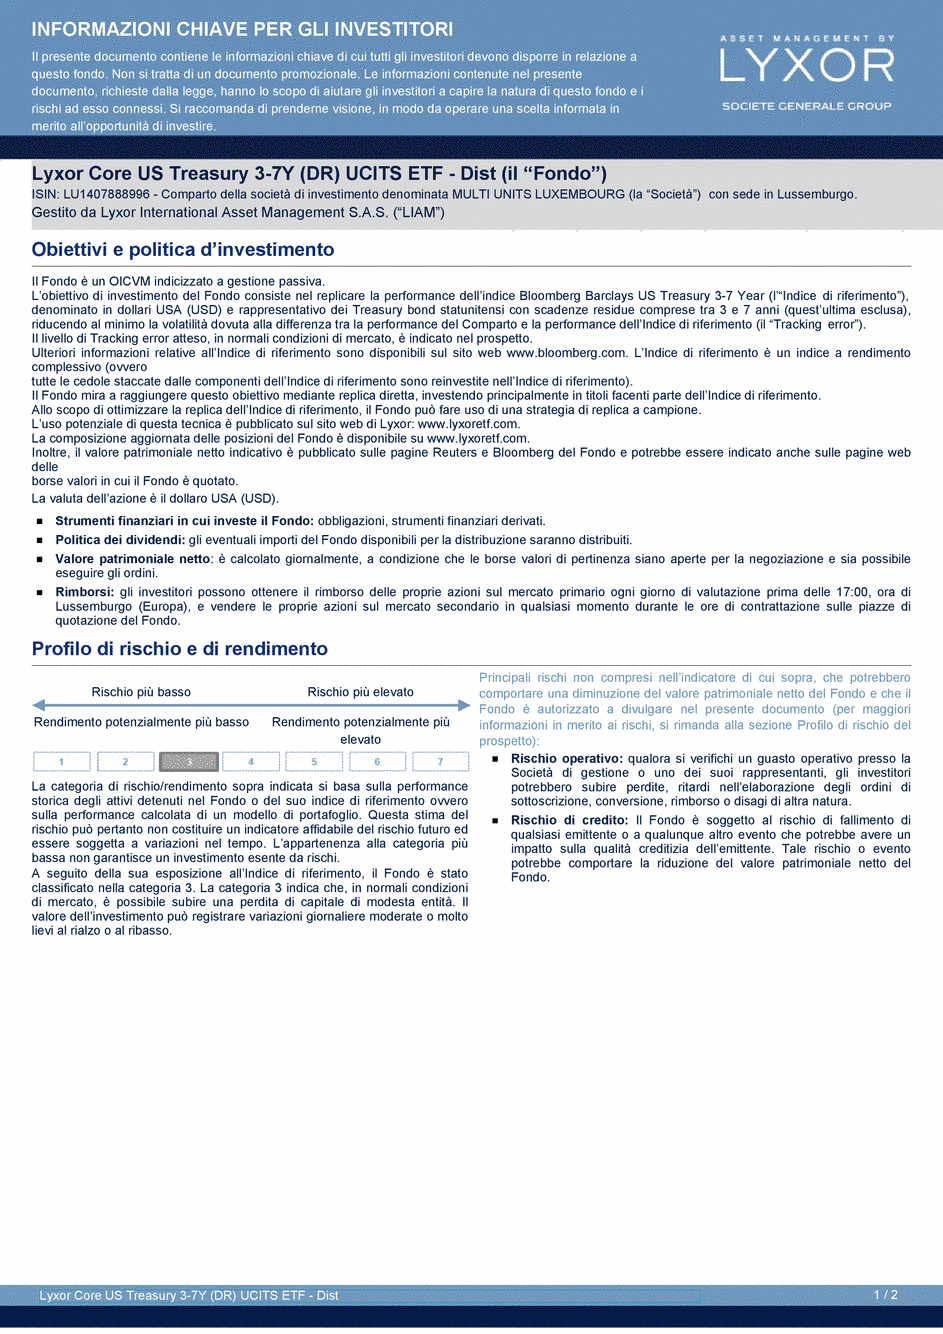 DICI Lyxor Core US Treasury 3-7Y (DR) UCITS ETF - Dist - 19/02/2021 - Italien